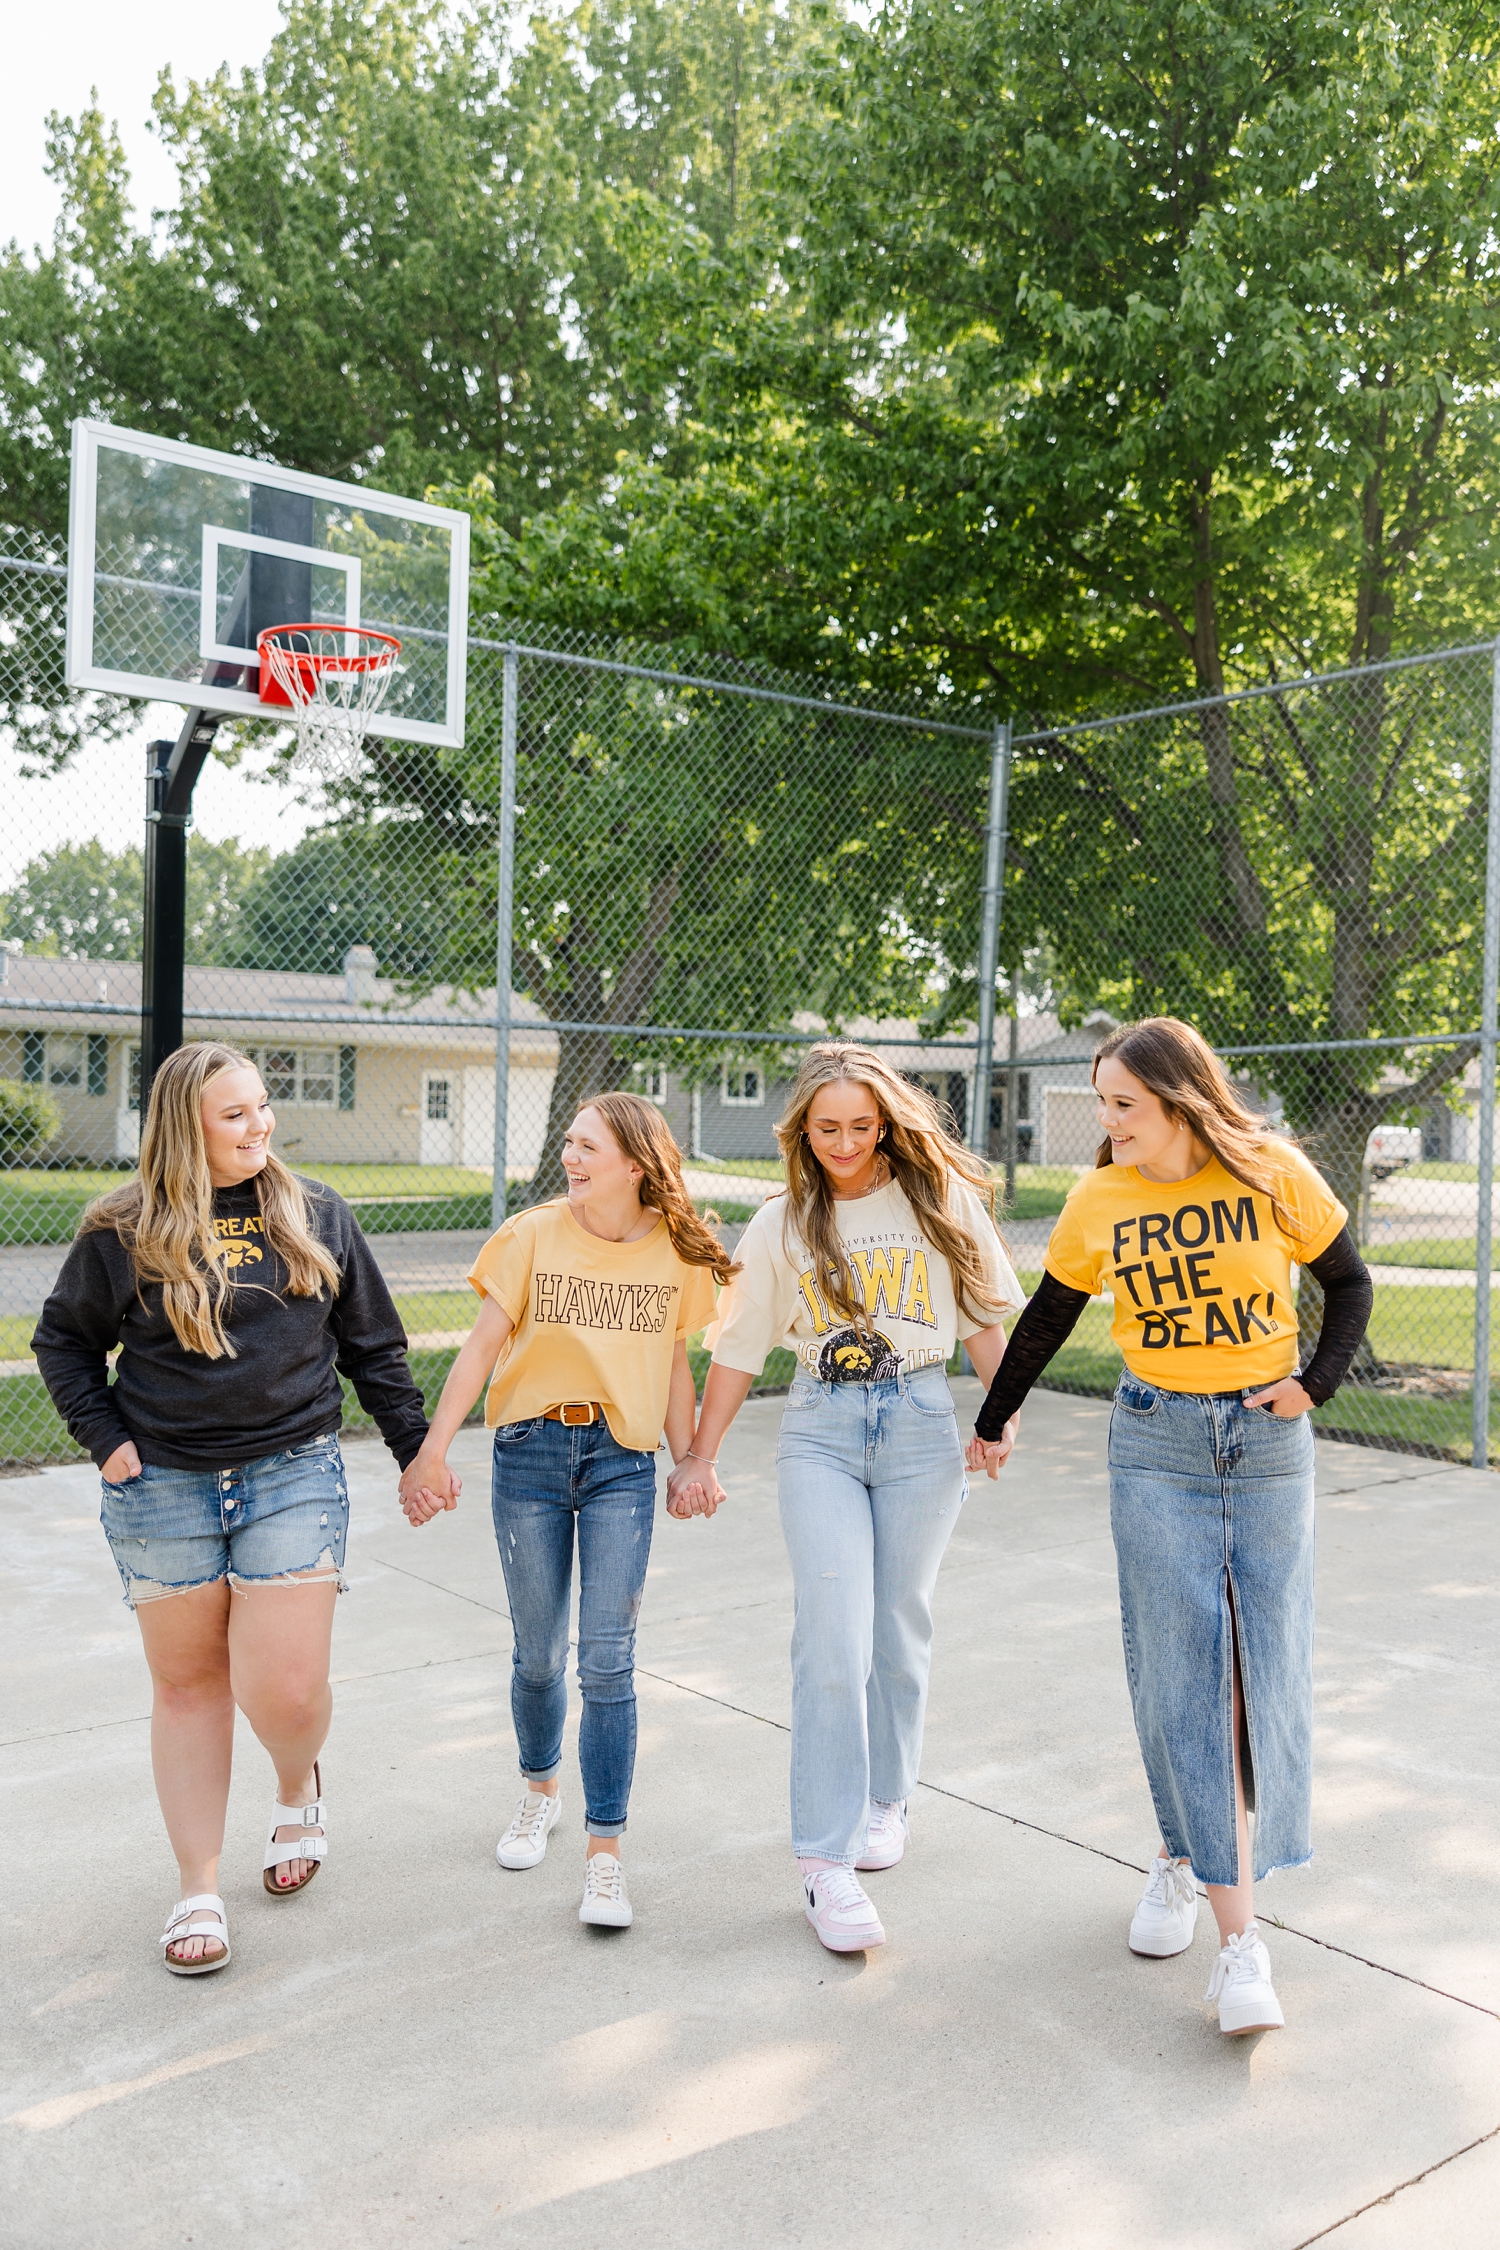 Four TEAM 25 girls, wearing Iowa clothing, walk hand in hand in an outdoor basketball court | CB Studio